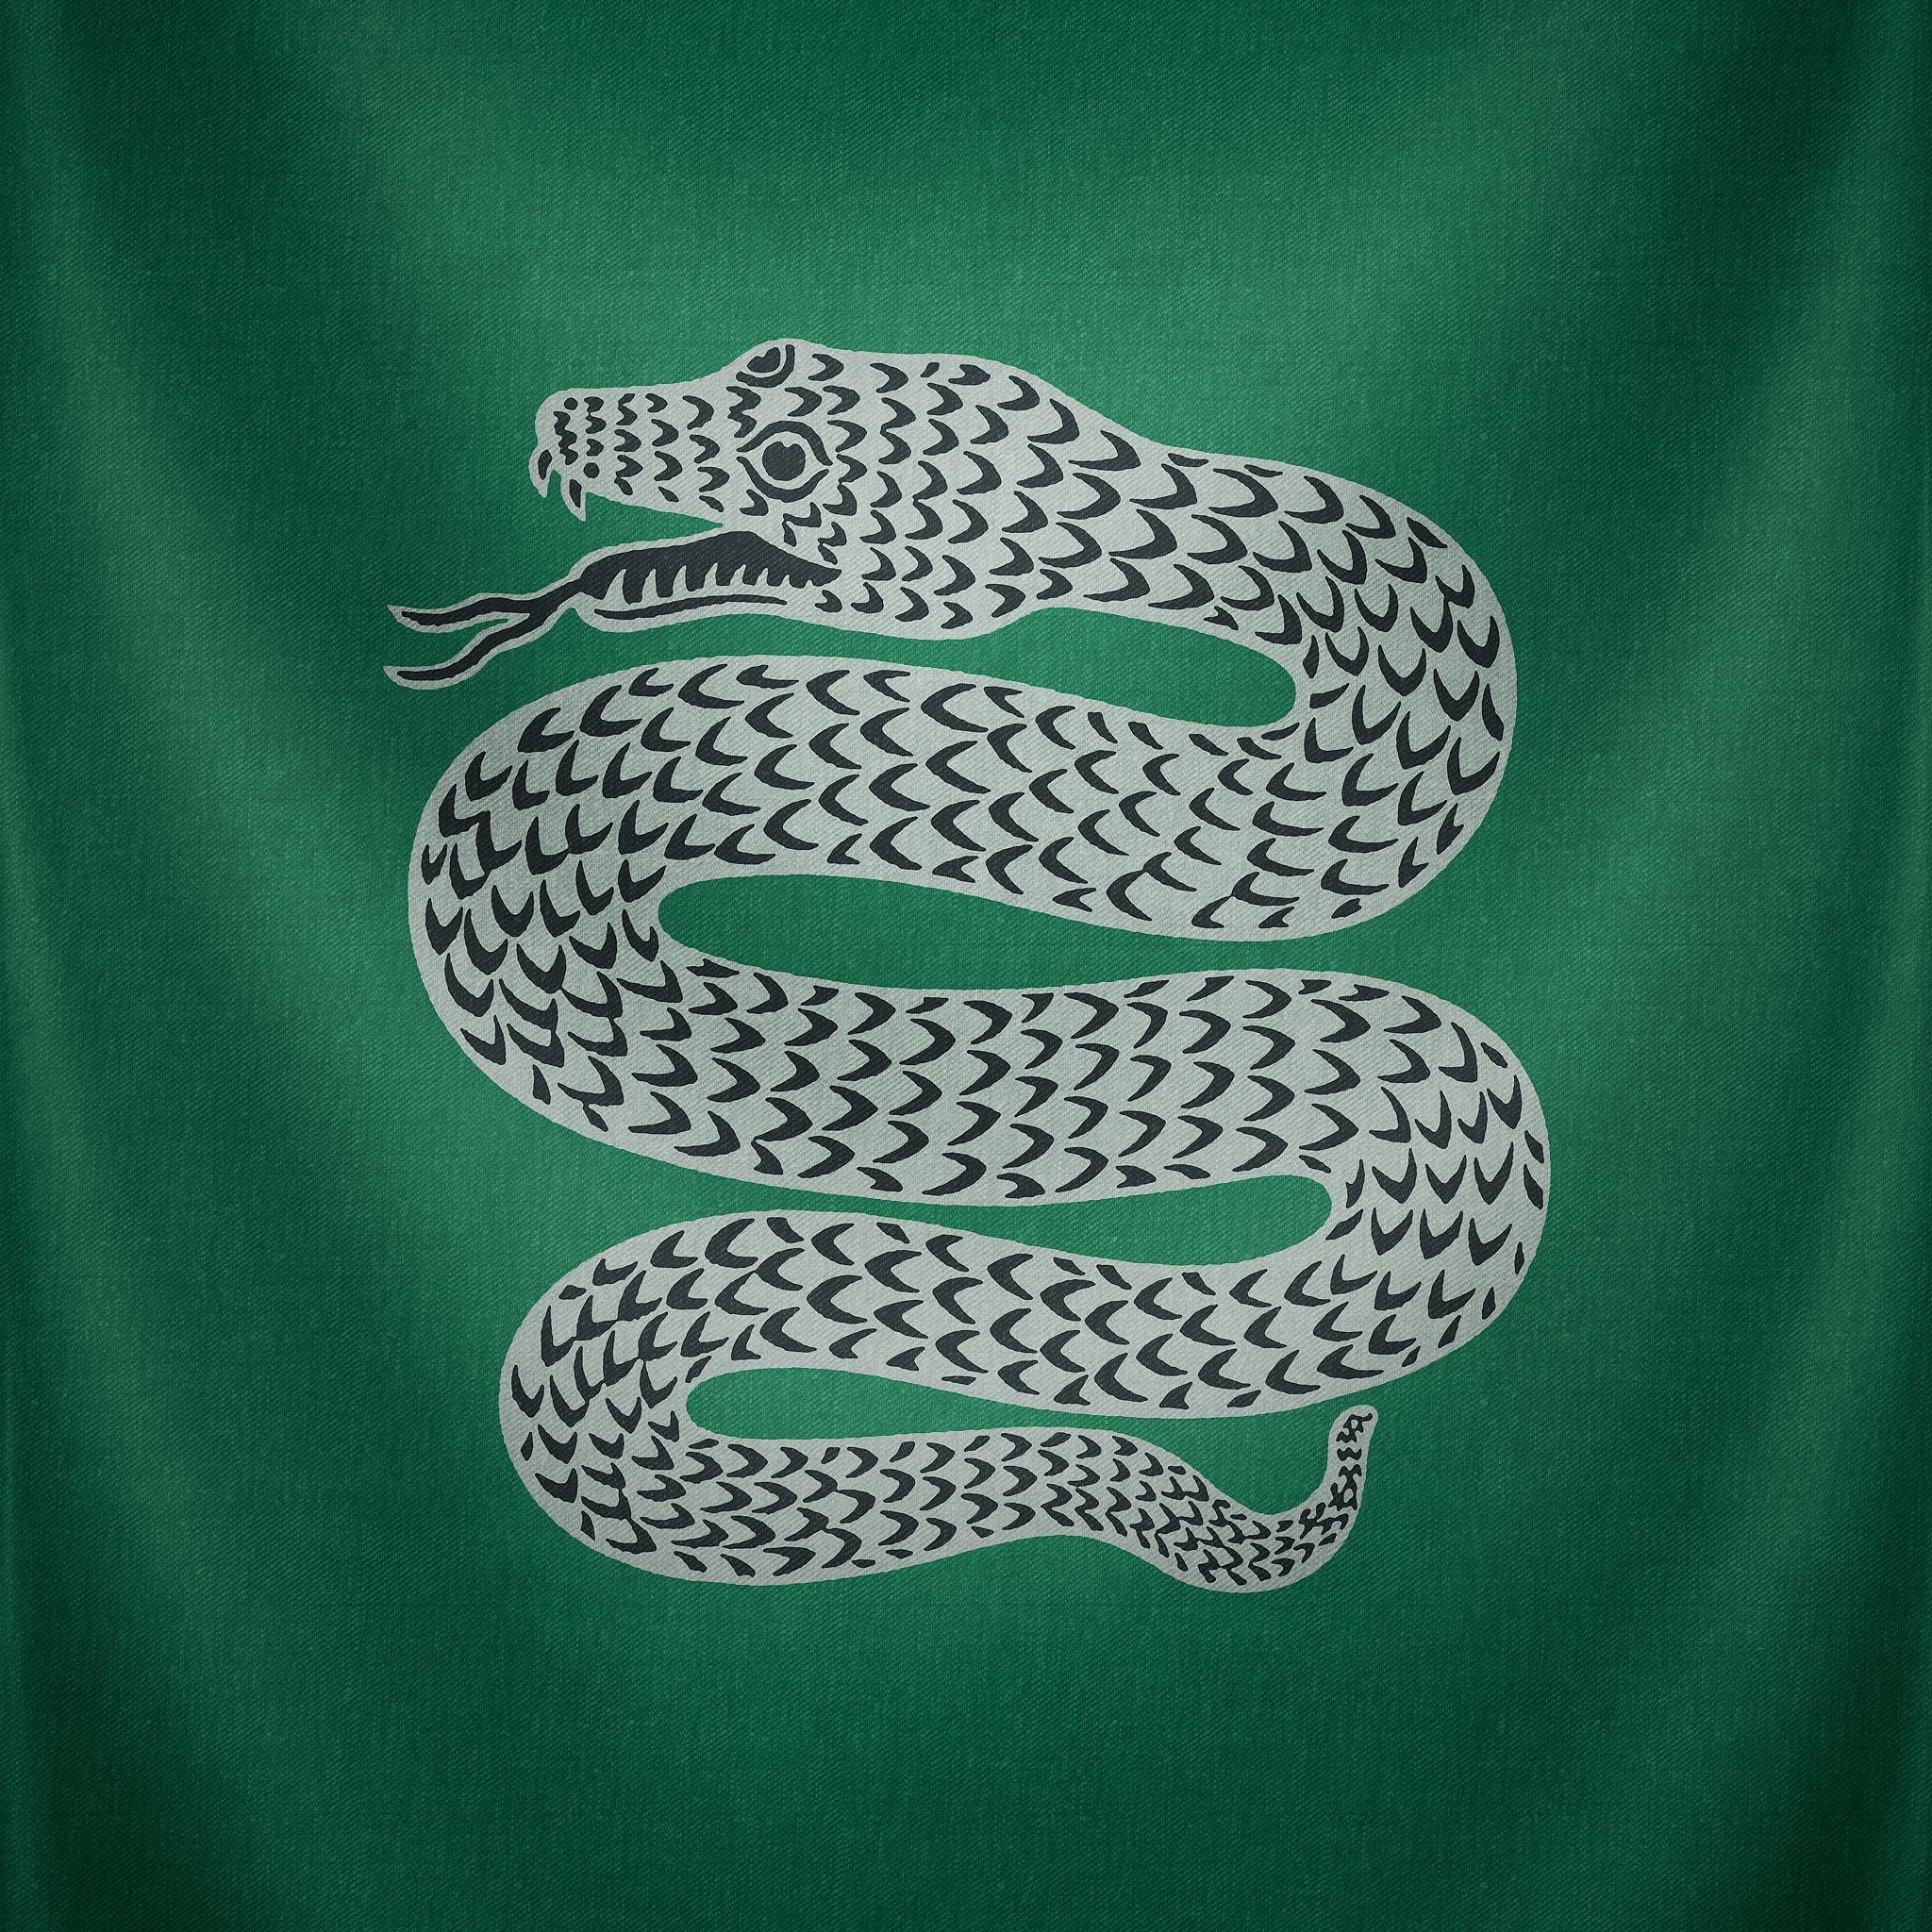 Slytherin Snake Wallpaper